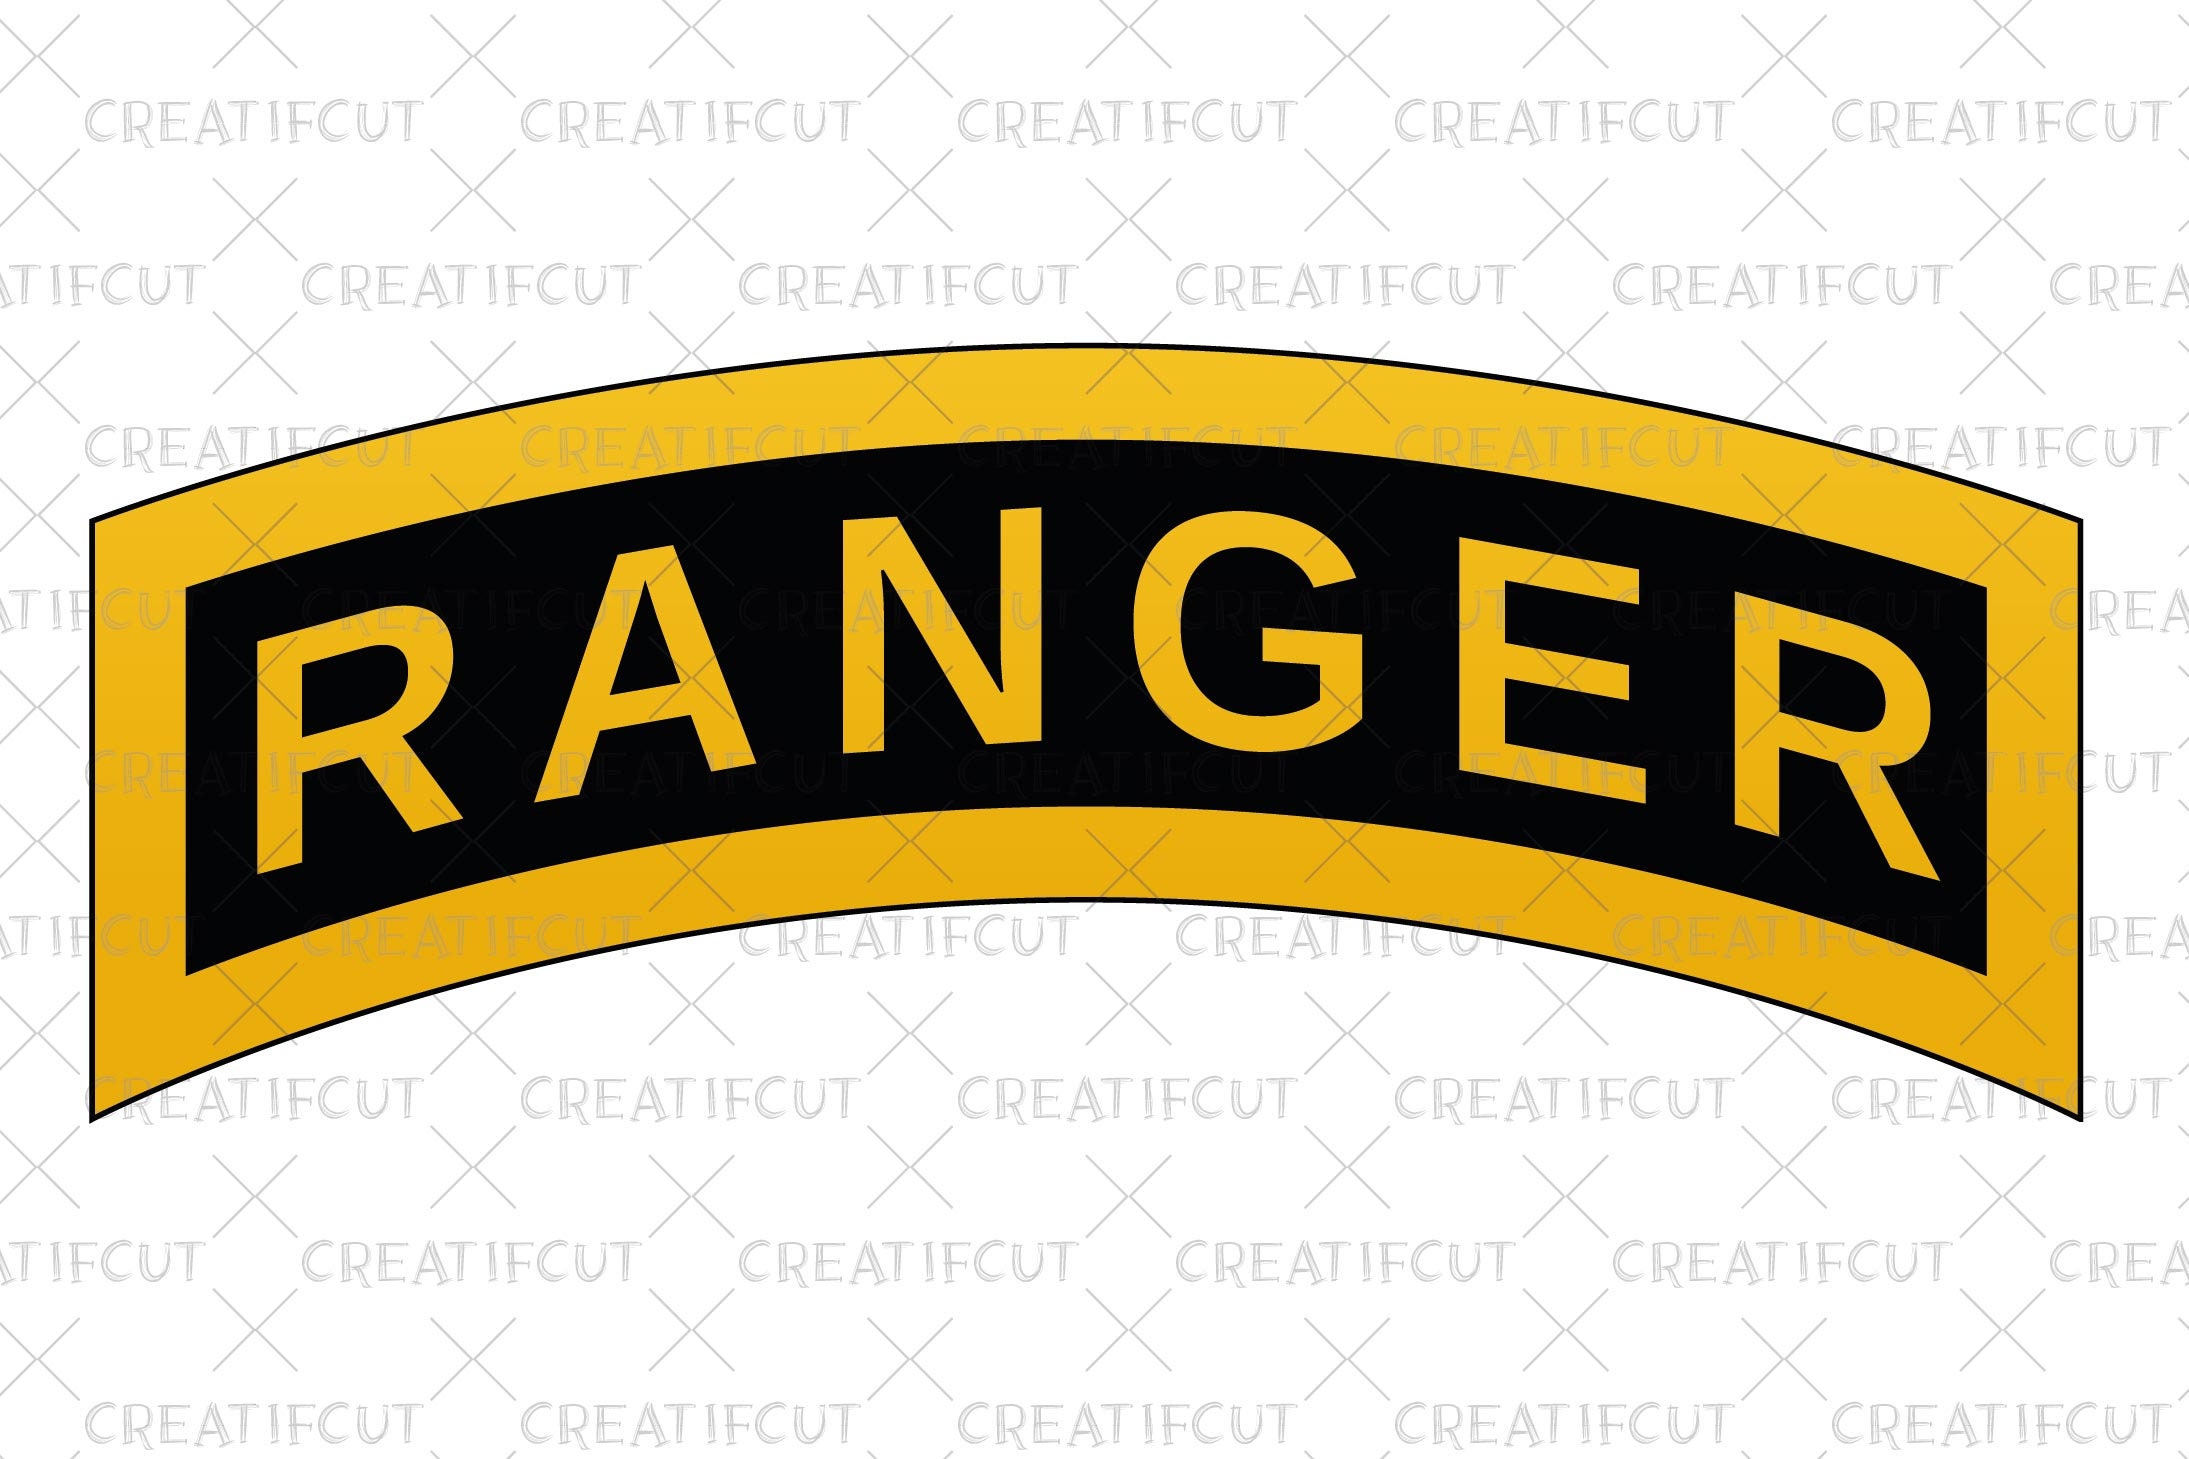 Us Army Ranger Tab Svg Military Badge Army Ranger Badge Etsy